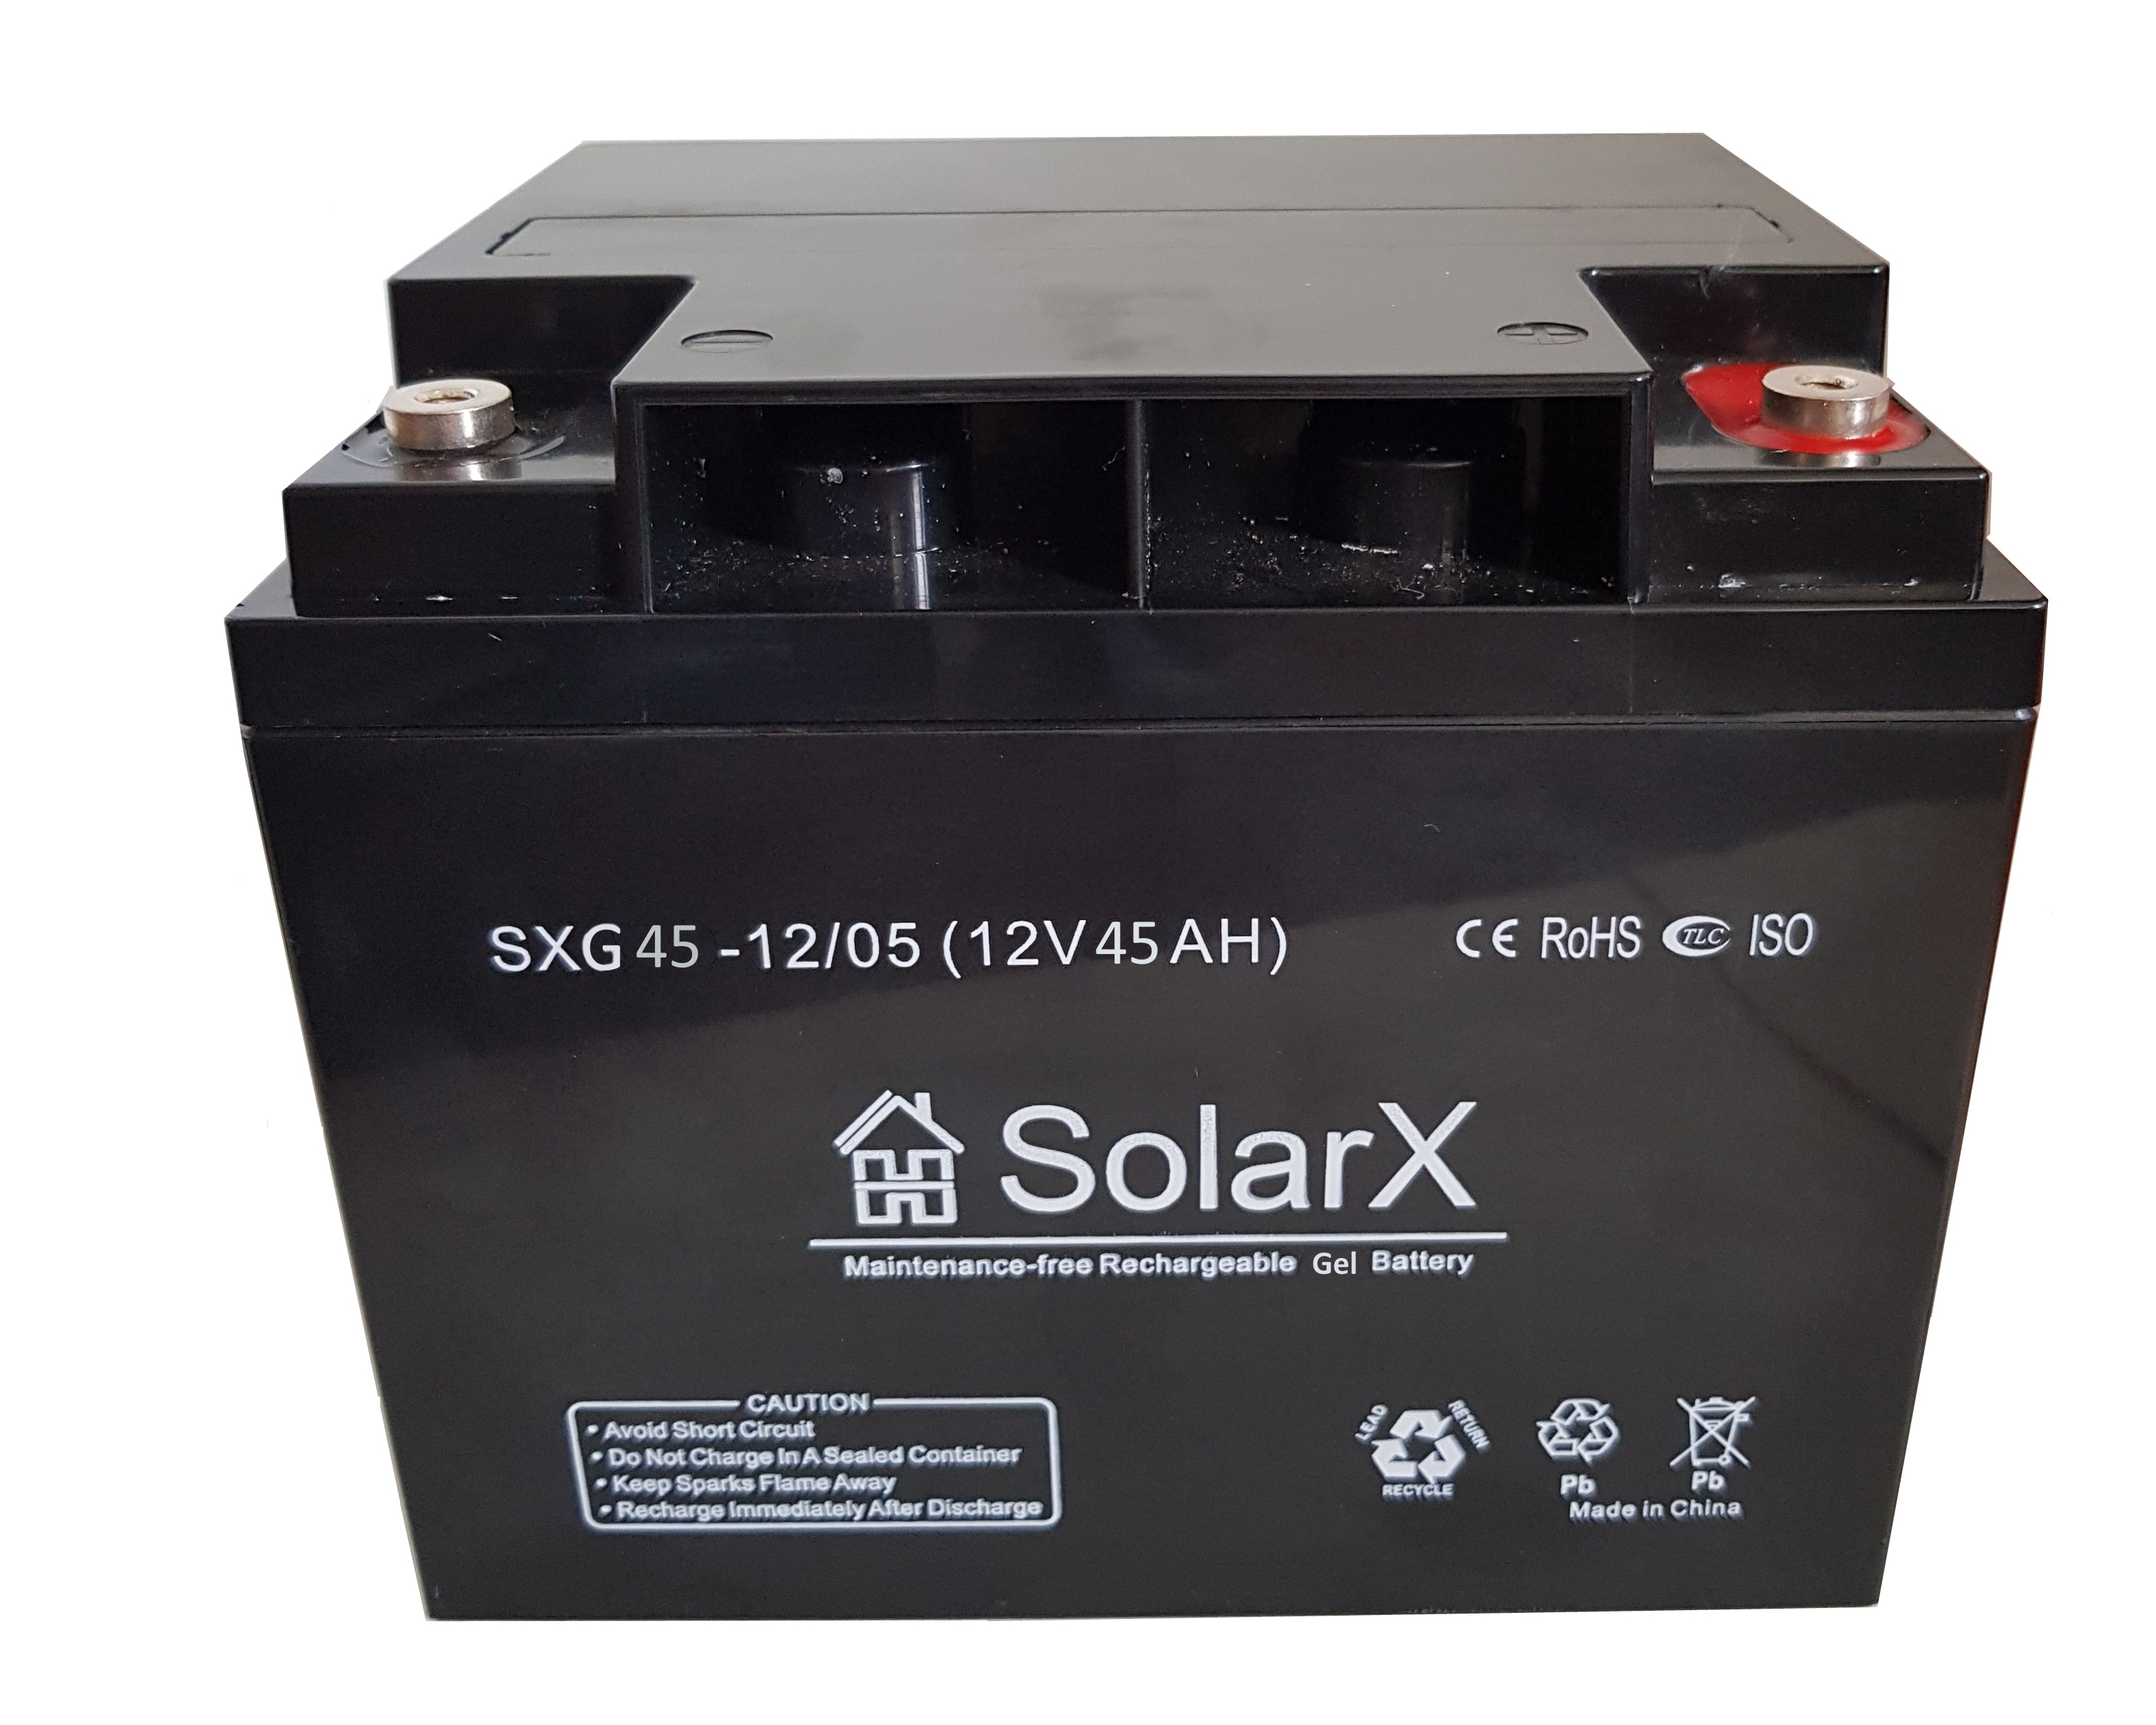 Solarx sxg 45 12